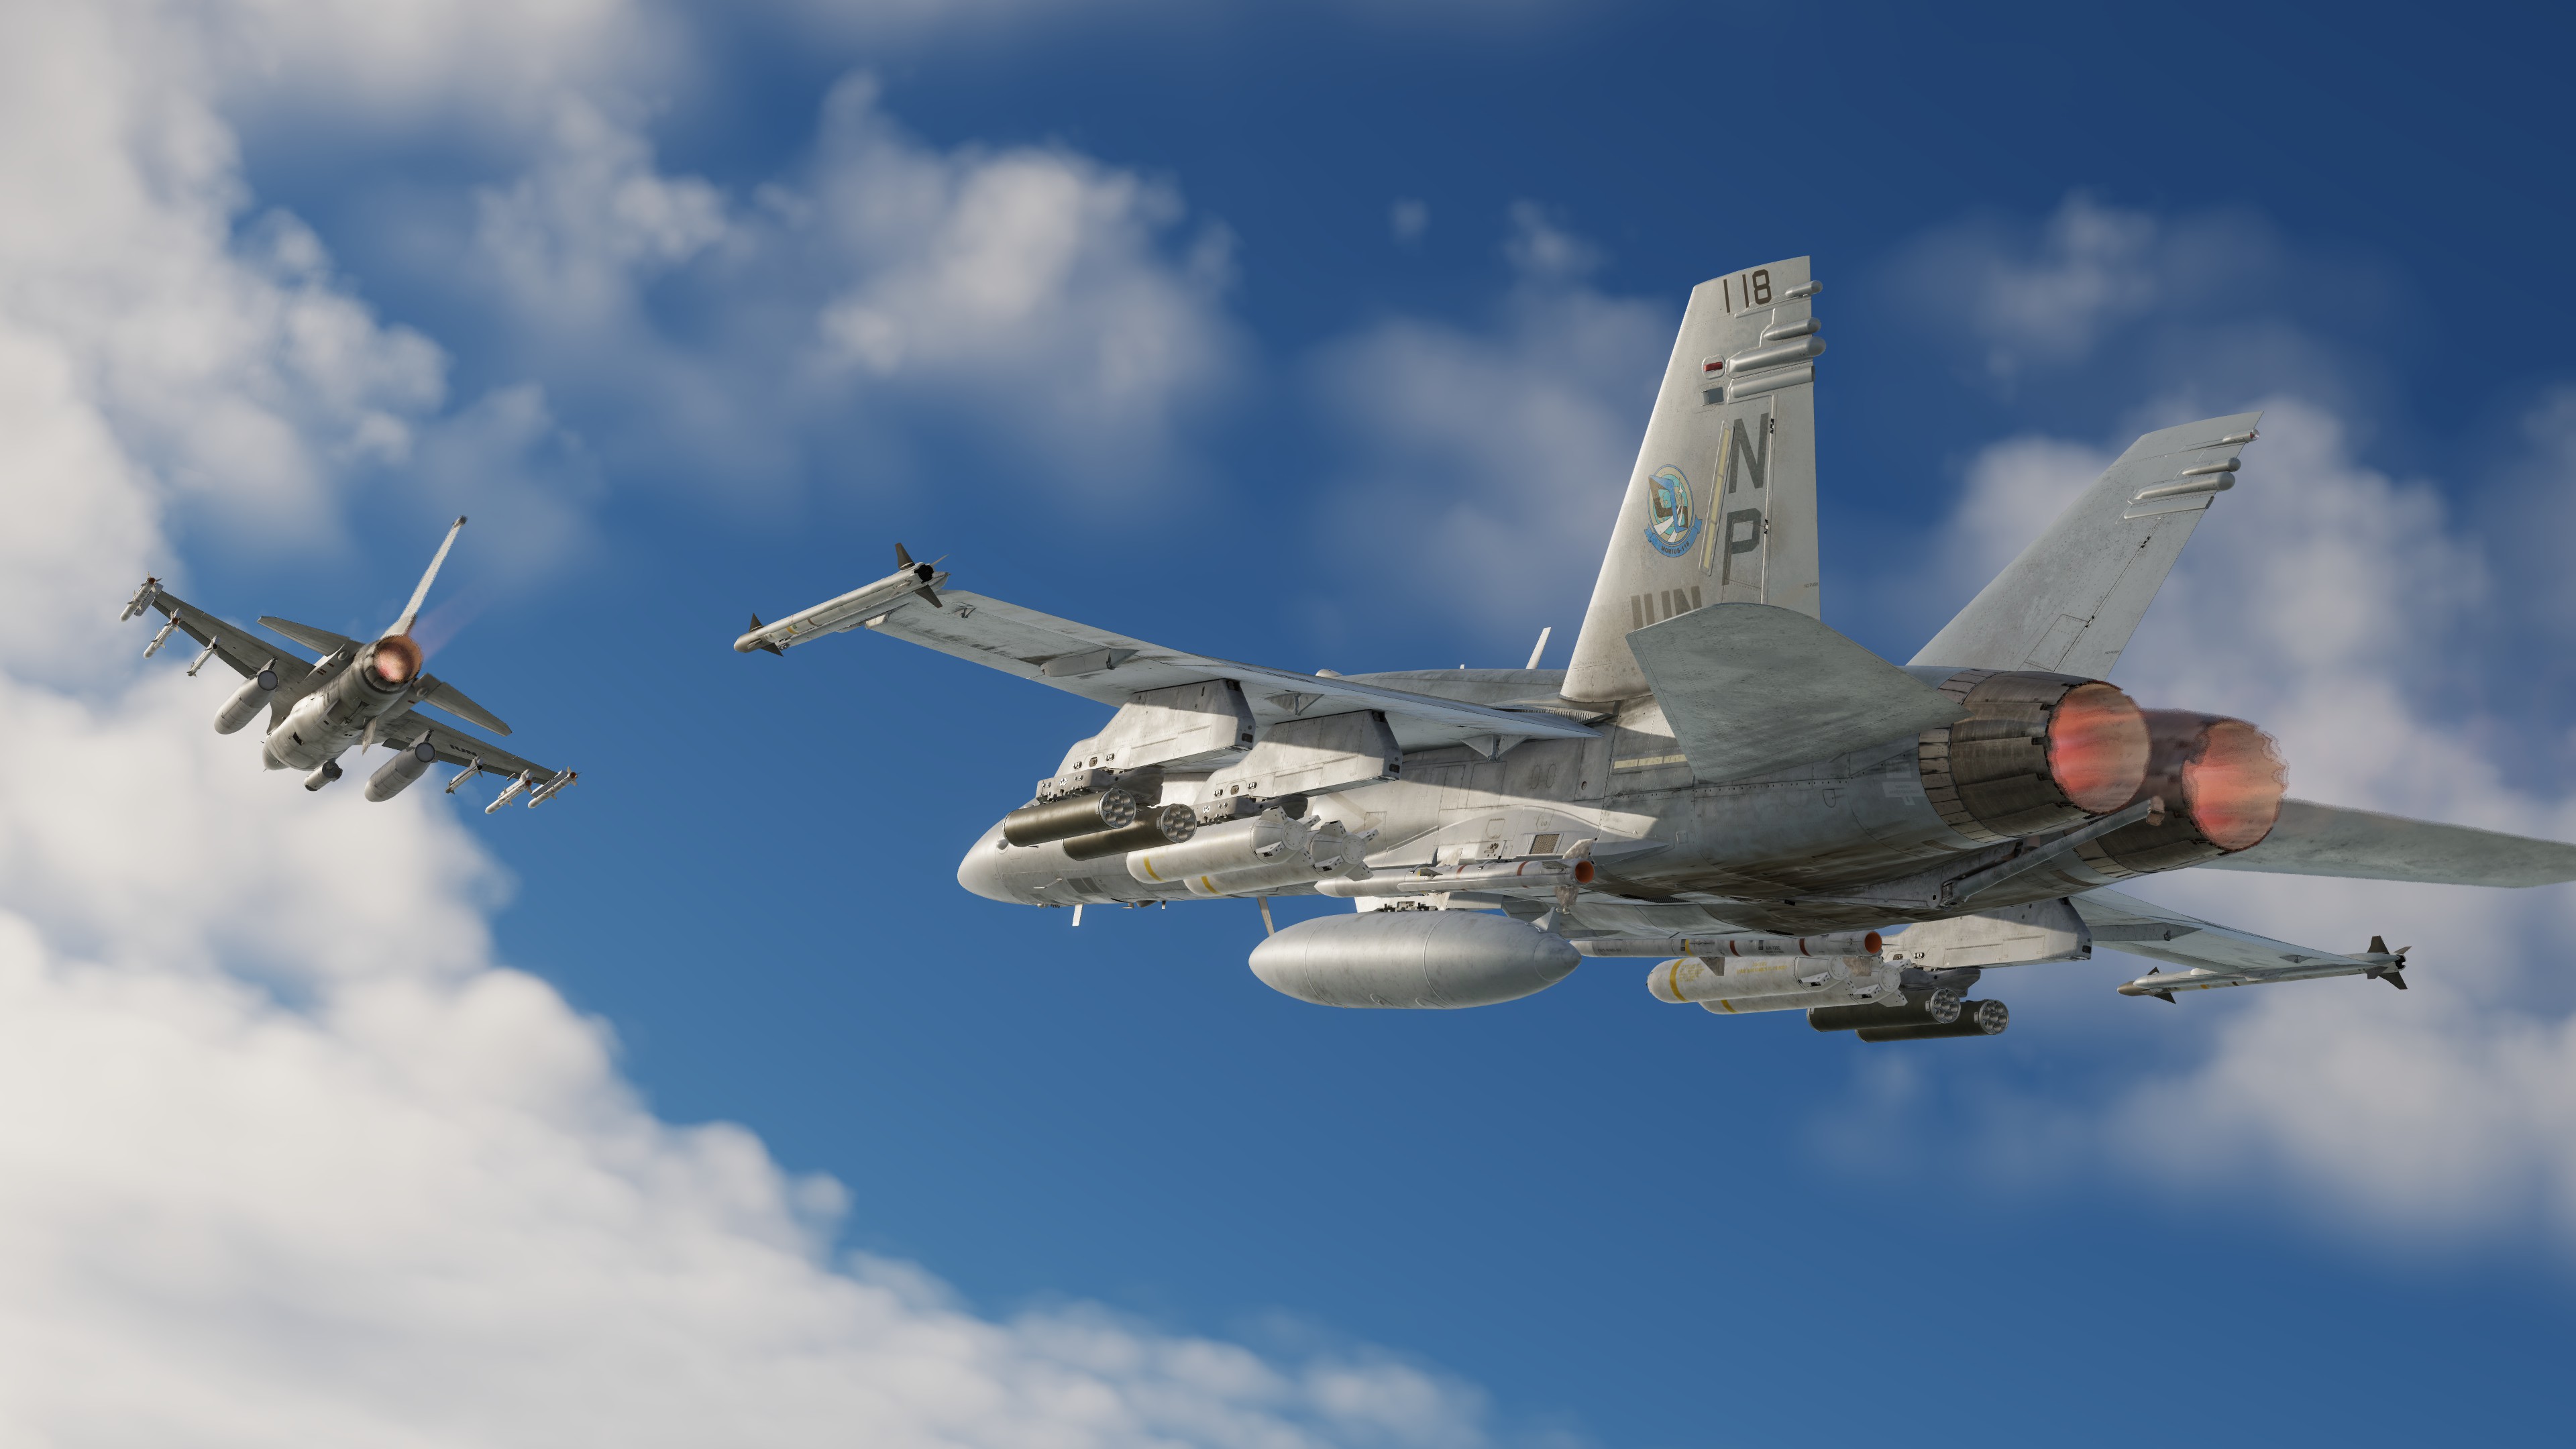 Ace combat 7 special missions#aircombat #acecombat7 #furrygamer